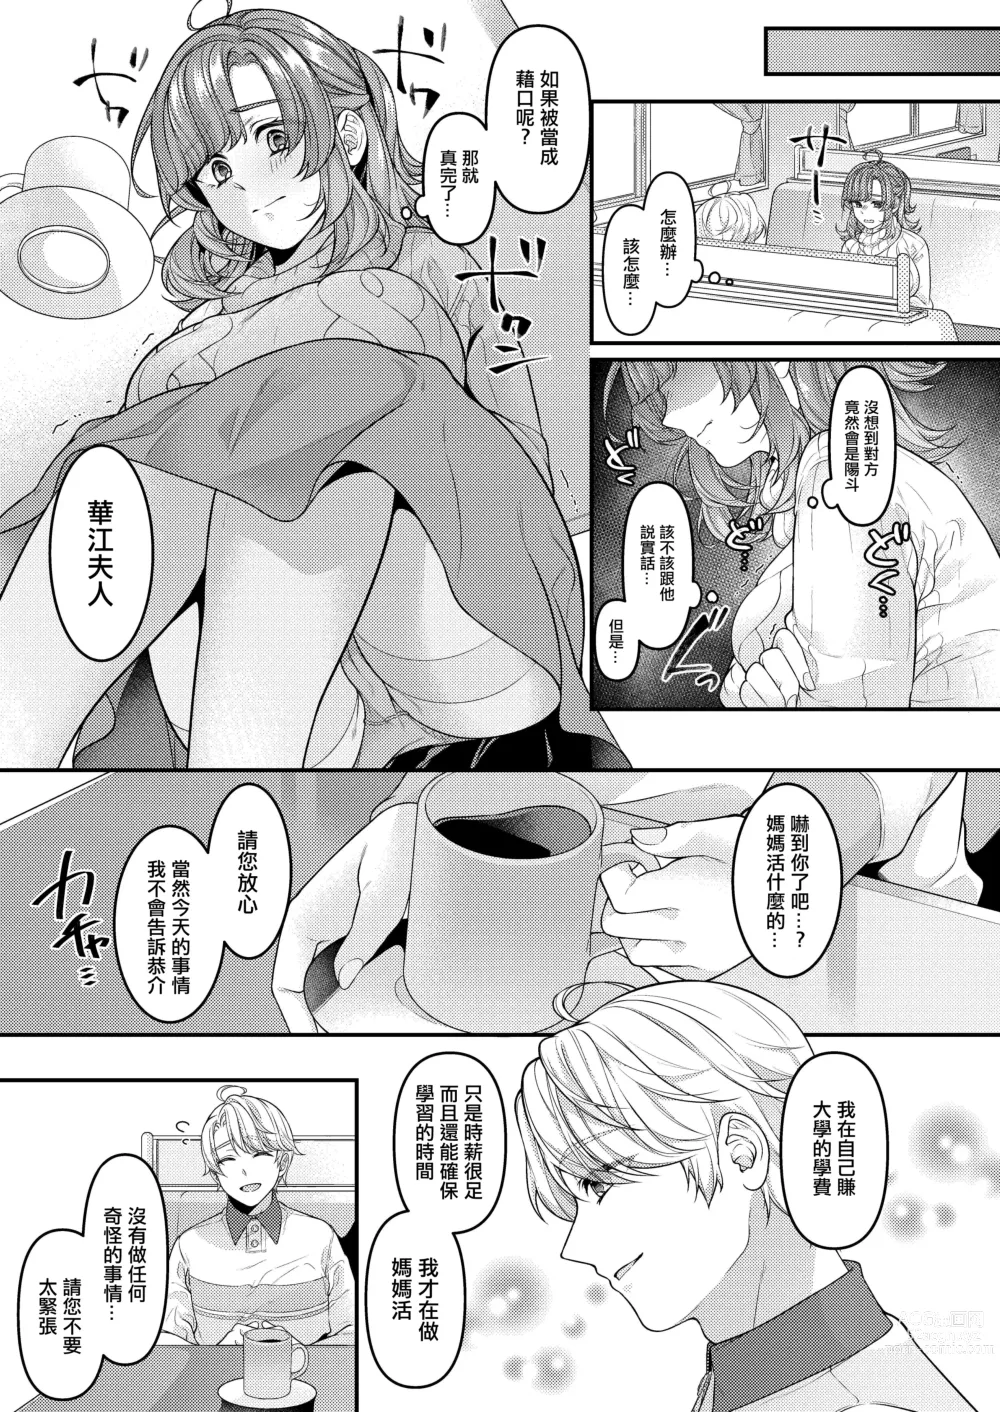 Page 6 of doujinshi Okaa-san, Mamakatsu ni Hamattemasu - Im addicted to feeling good with young guys.